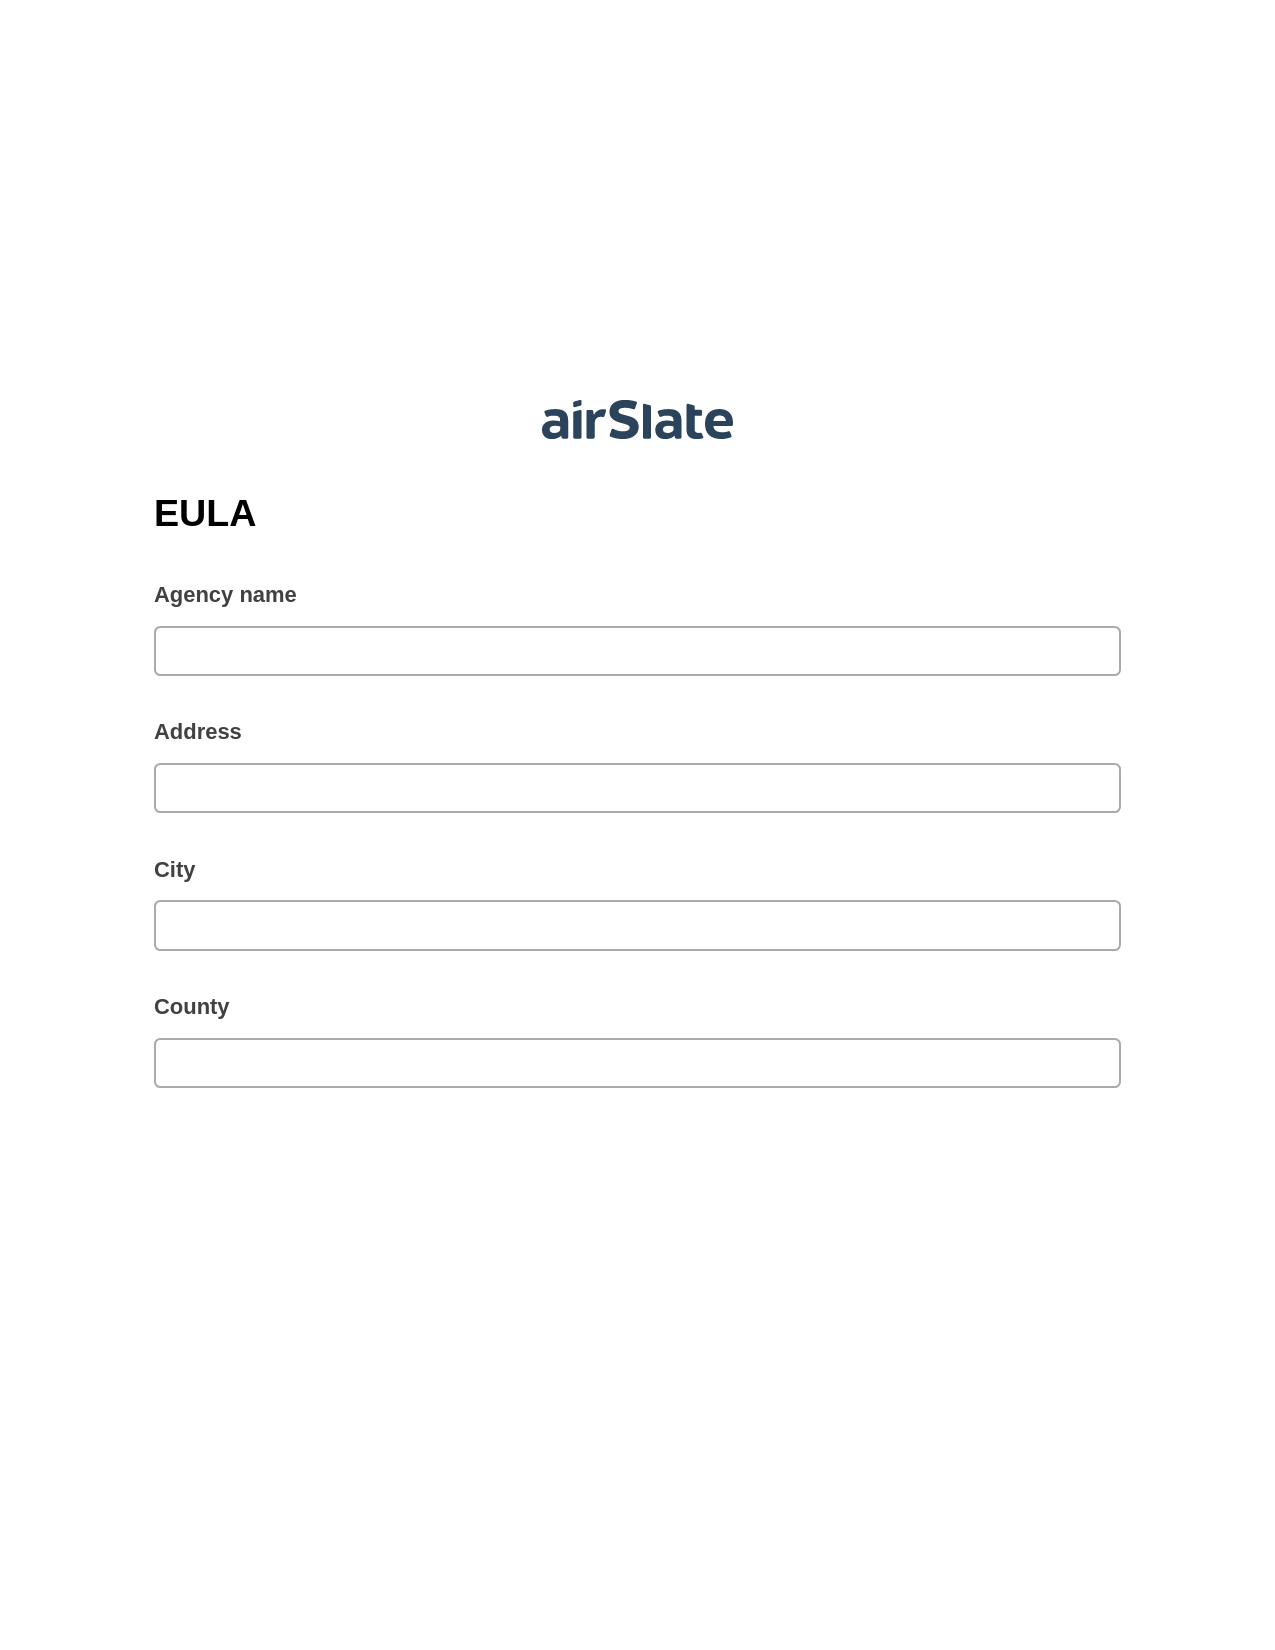 Multirole EULA Pre-fill Slate from MS Dynamics 365 Records Bot, Set signature type addon, Post-finish Document Bot